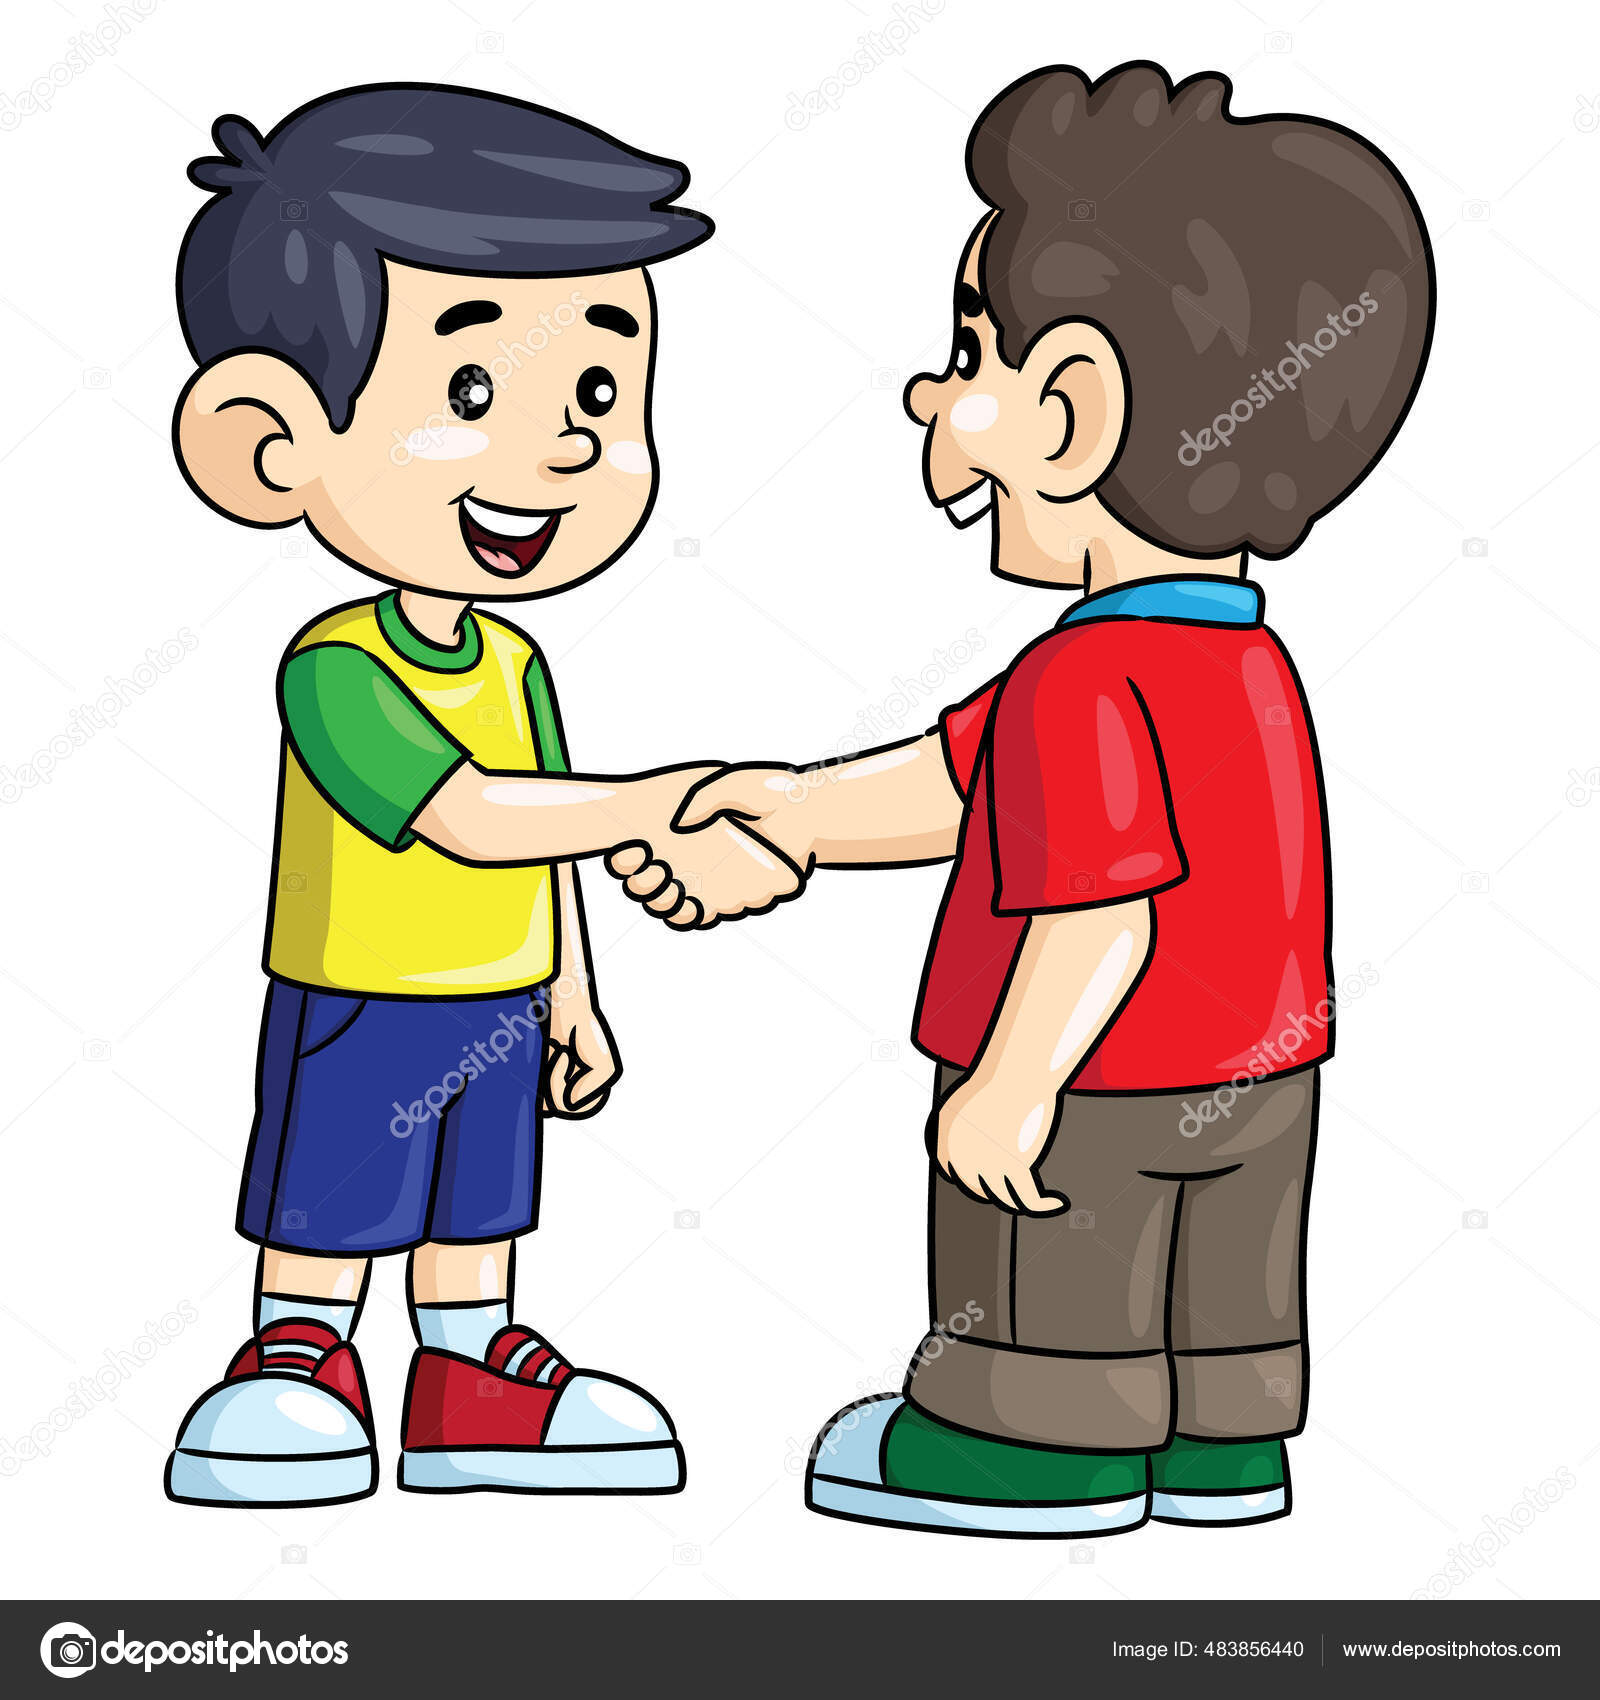 Boys shaking hands Vector Art Stock Images | Depositphotos